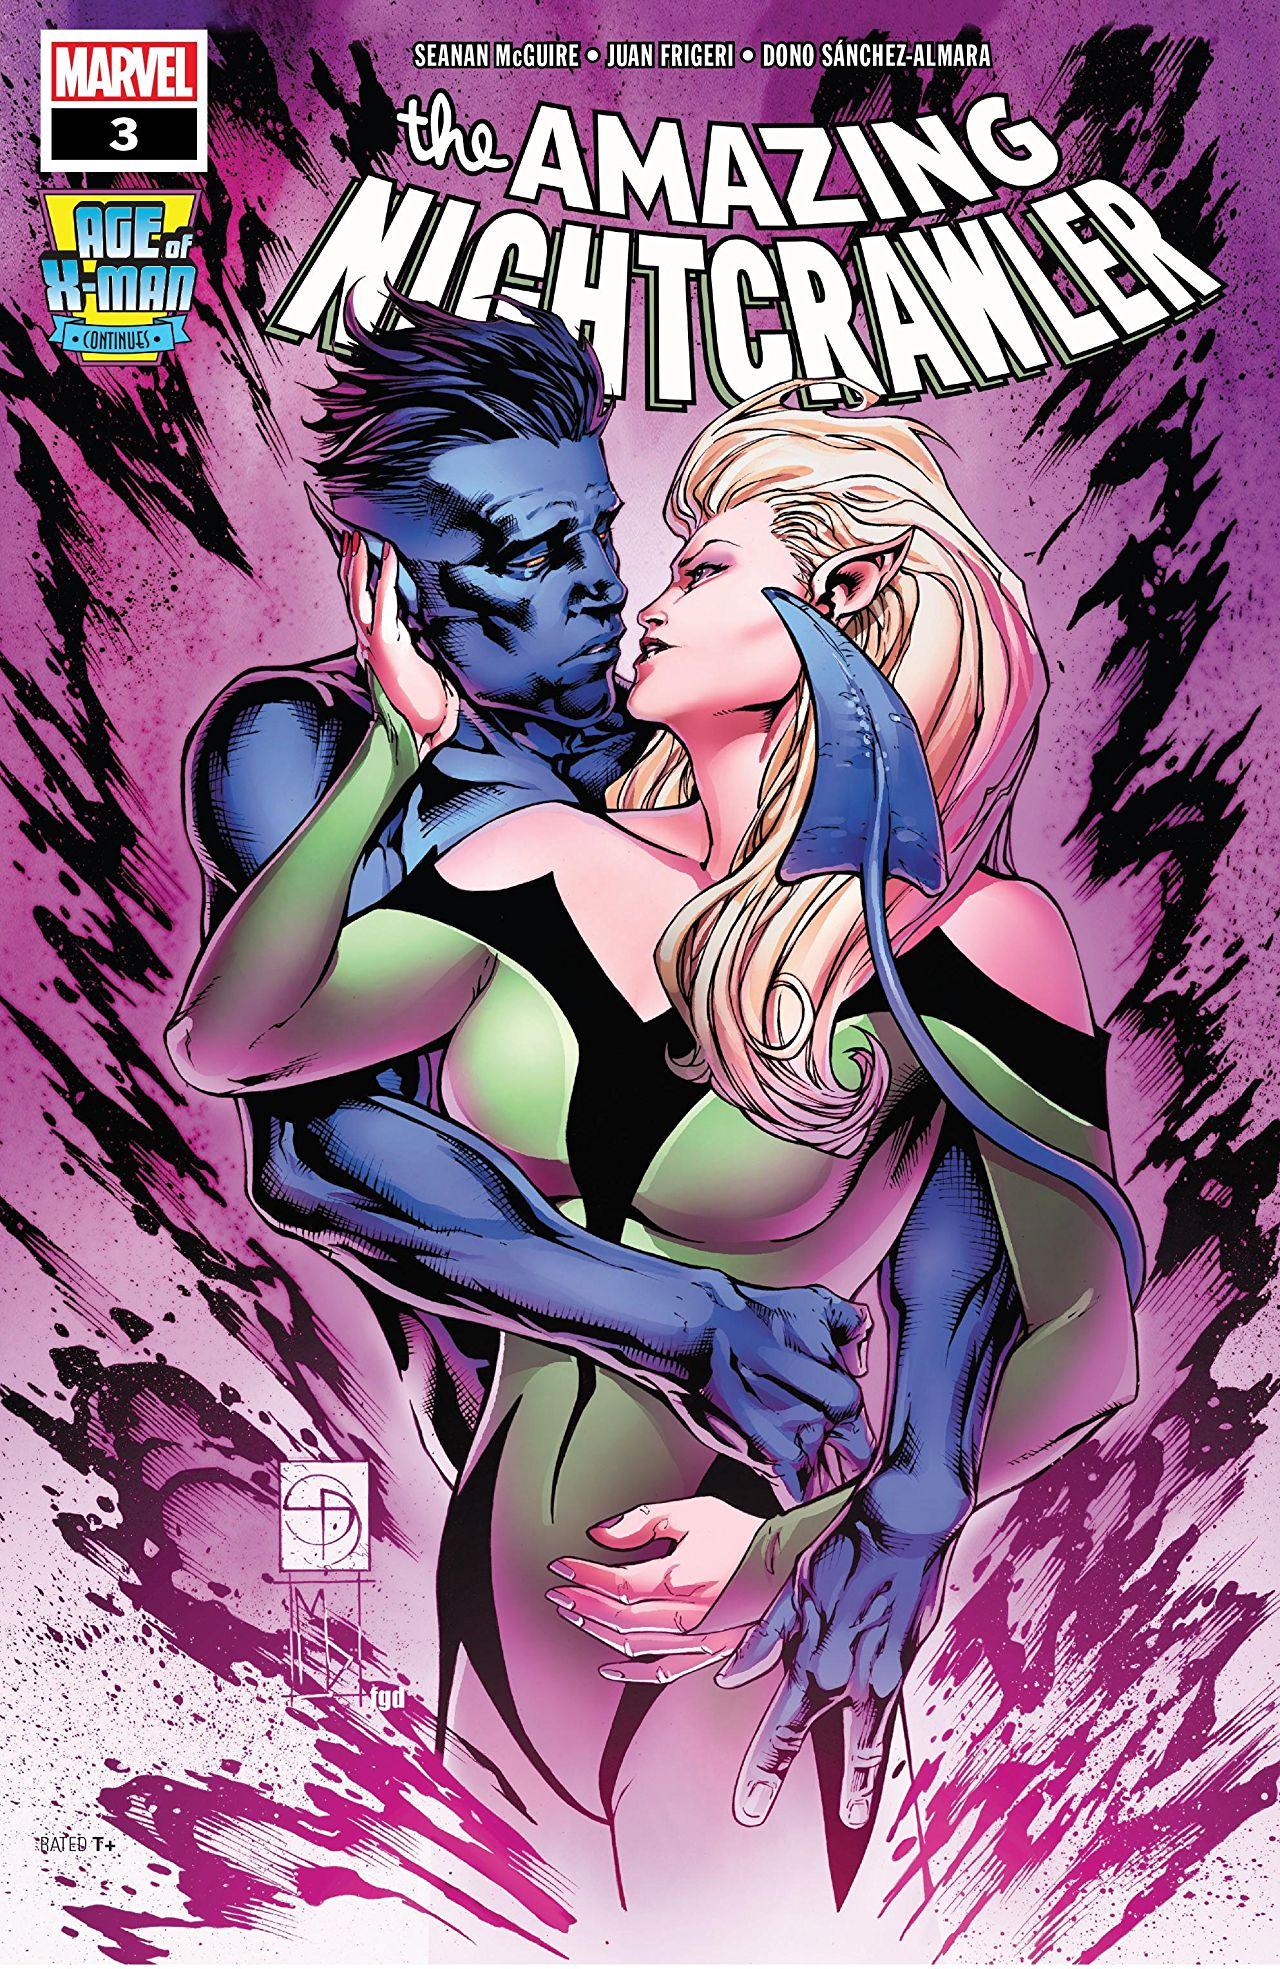 Age of X-Man: The Amazing Nightcrawler Vol. 1 #3